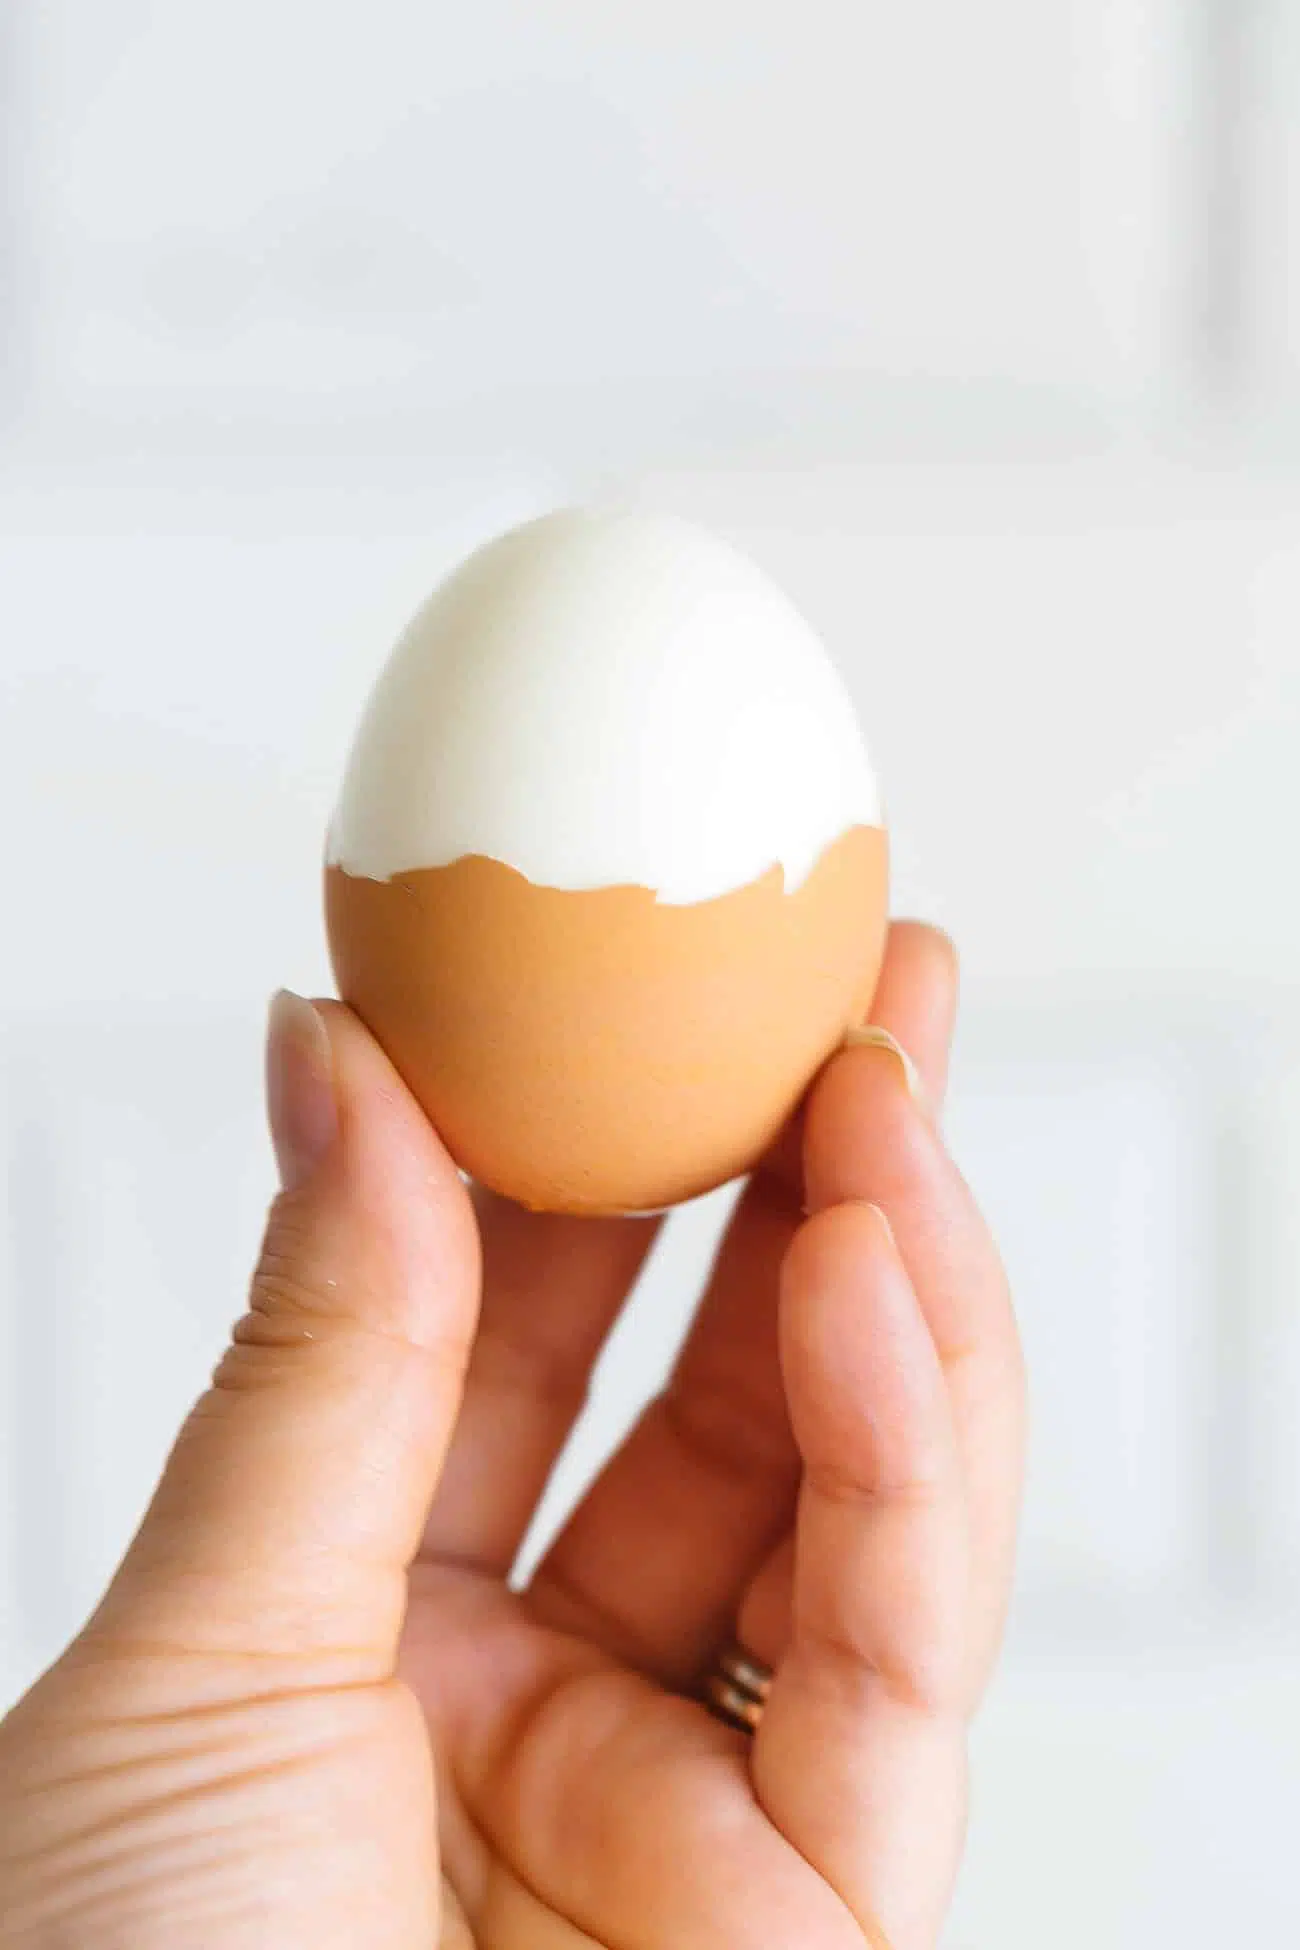 A hand holding a half peeled hard boiled egg.